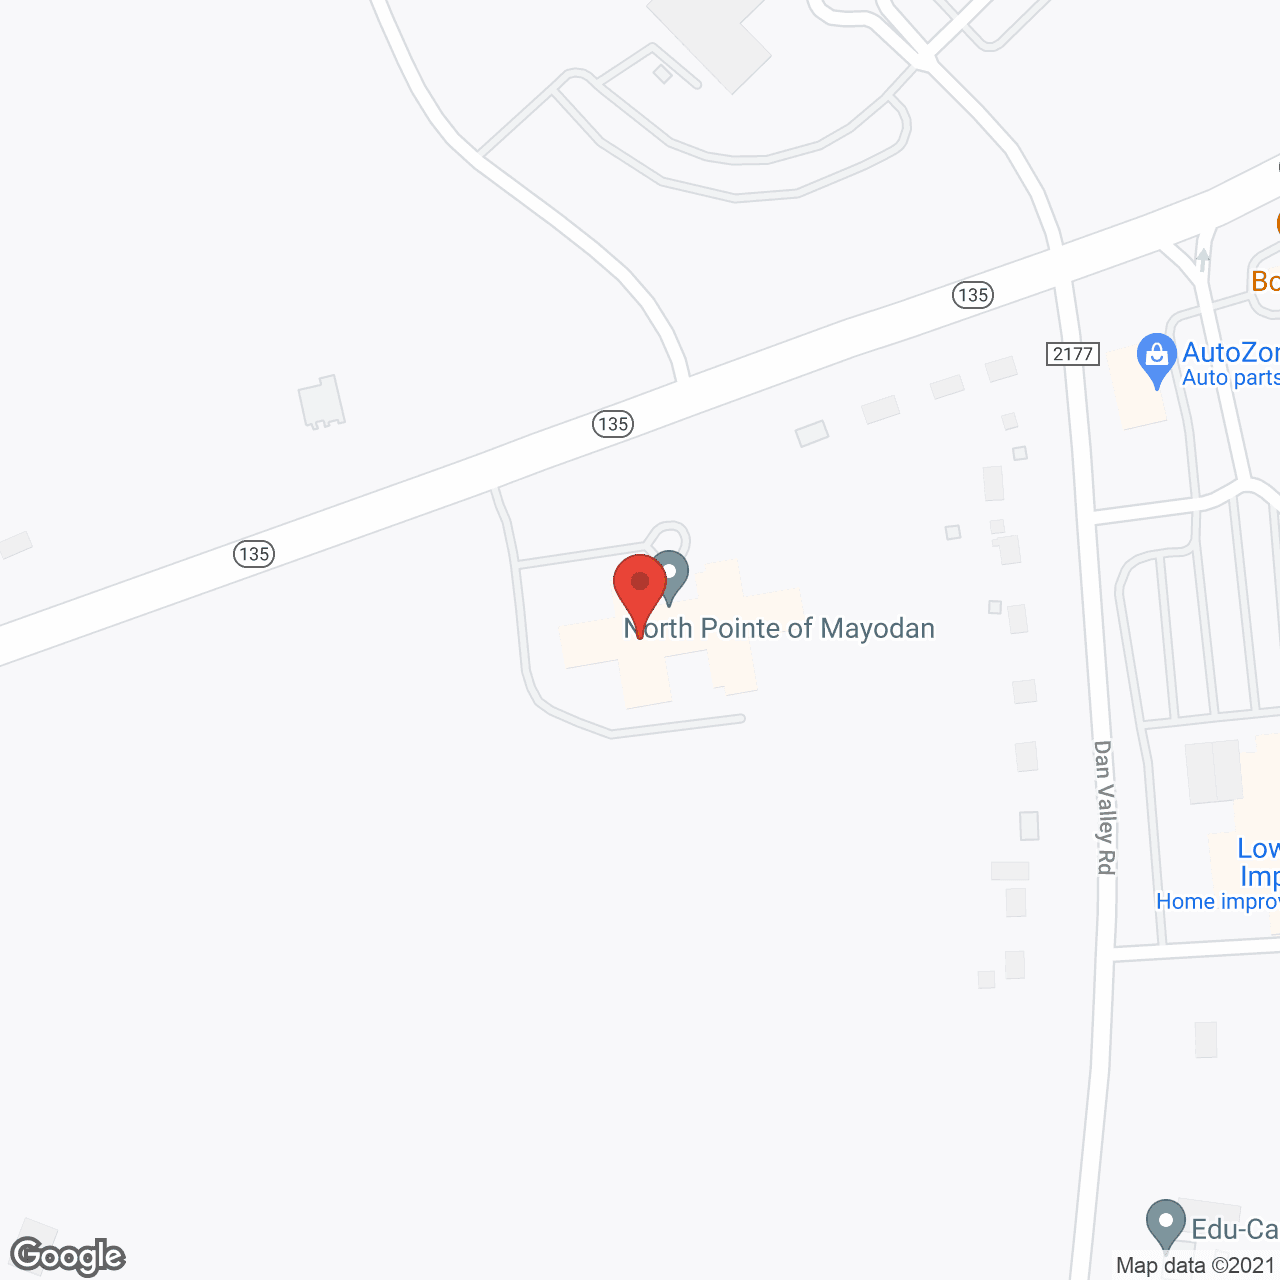 North Pointe of Mayodan in google map